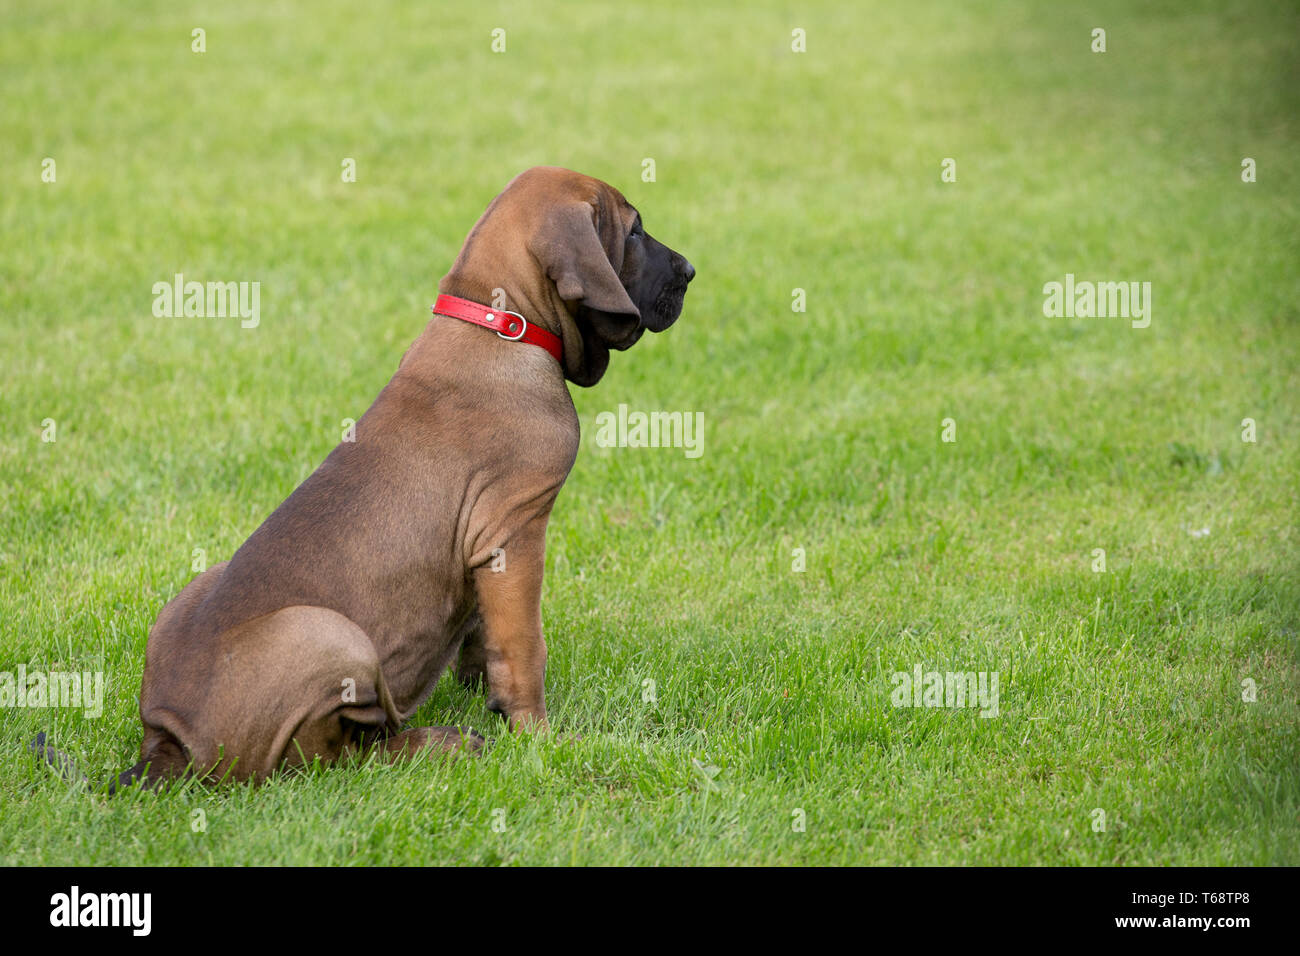 Puppy of Fila Brasileiro (Brazilian Mastiff) Stock Image - Image